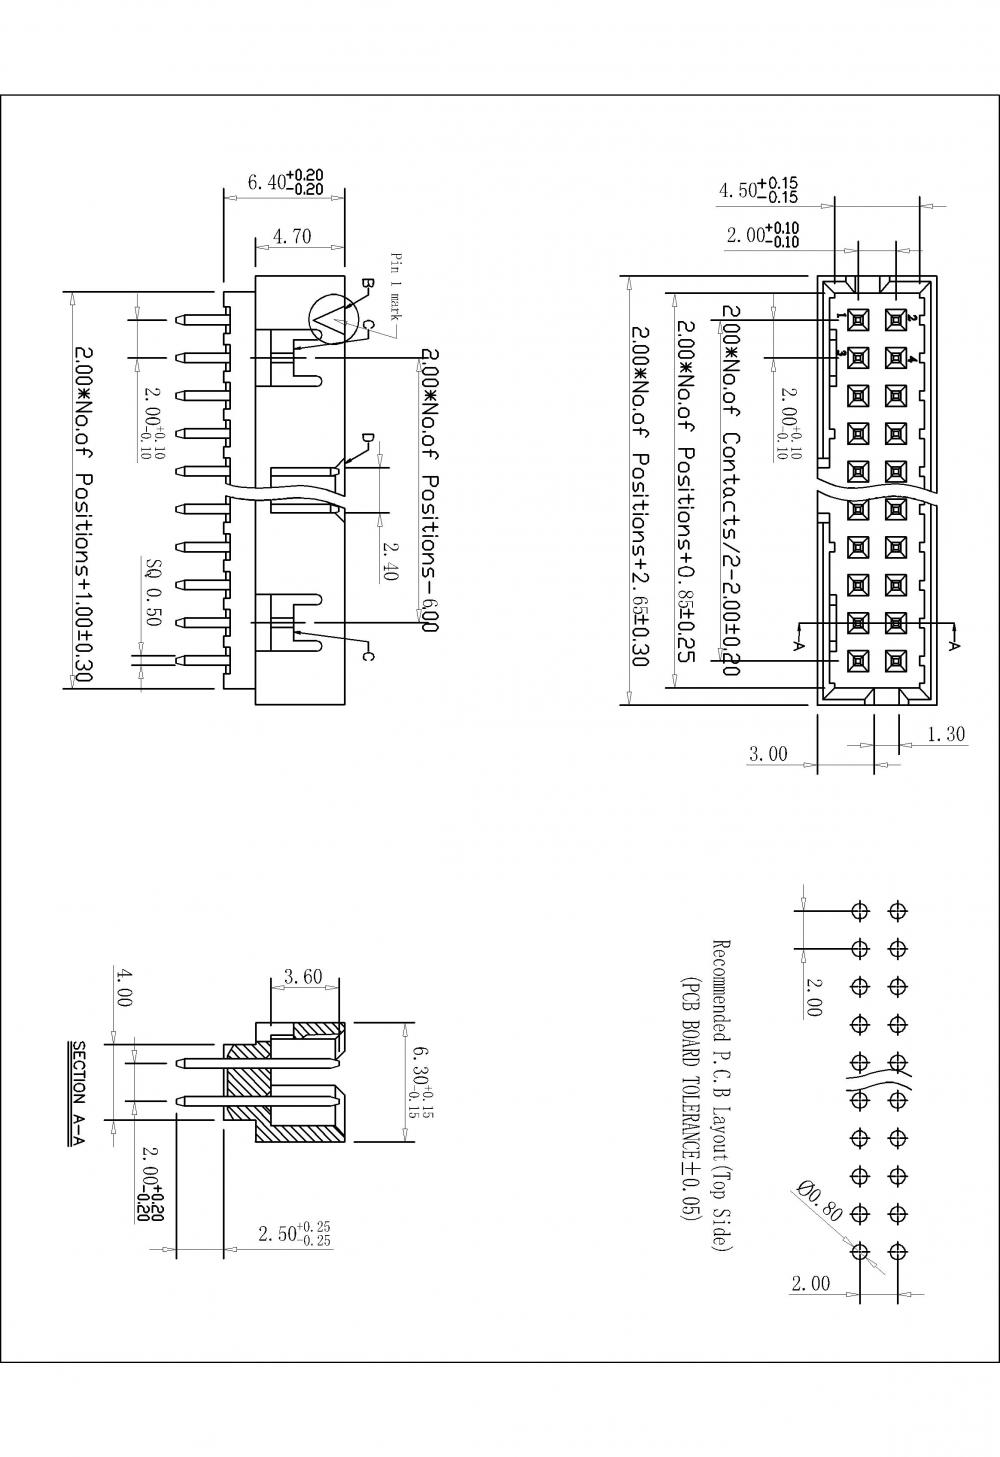 Cabeçalho de caixa de 2,00 mm 180 ° H = conector de 6,40 mm